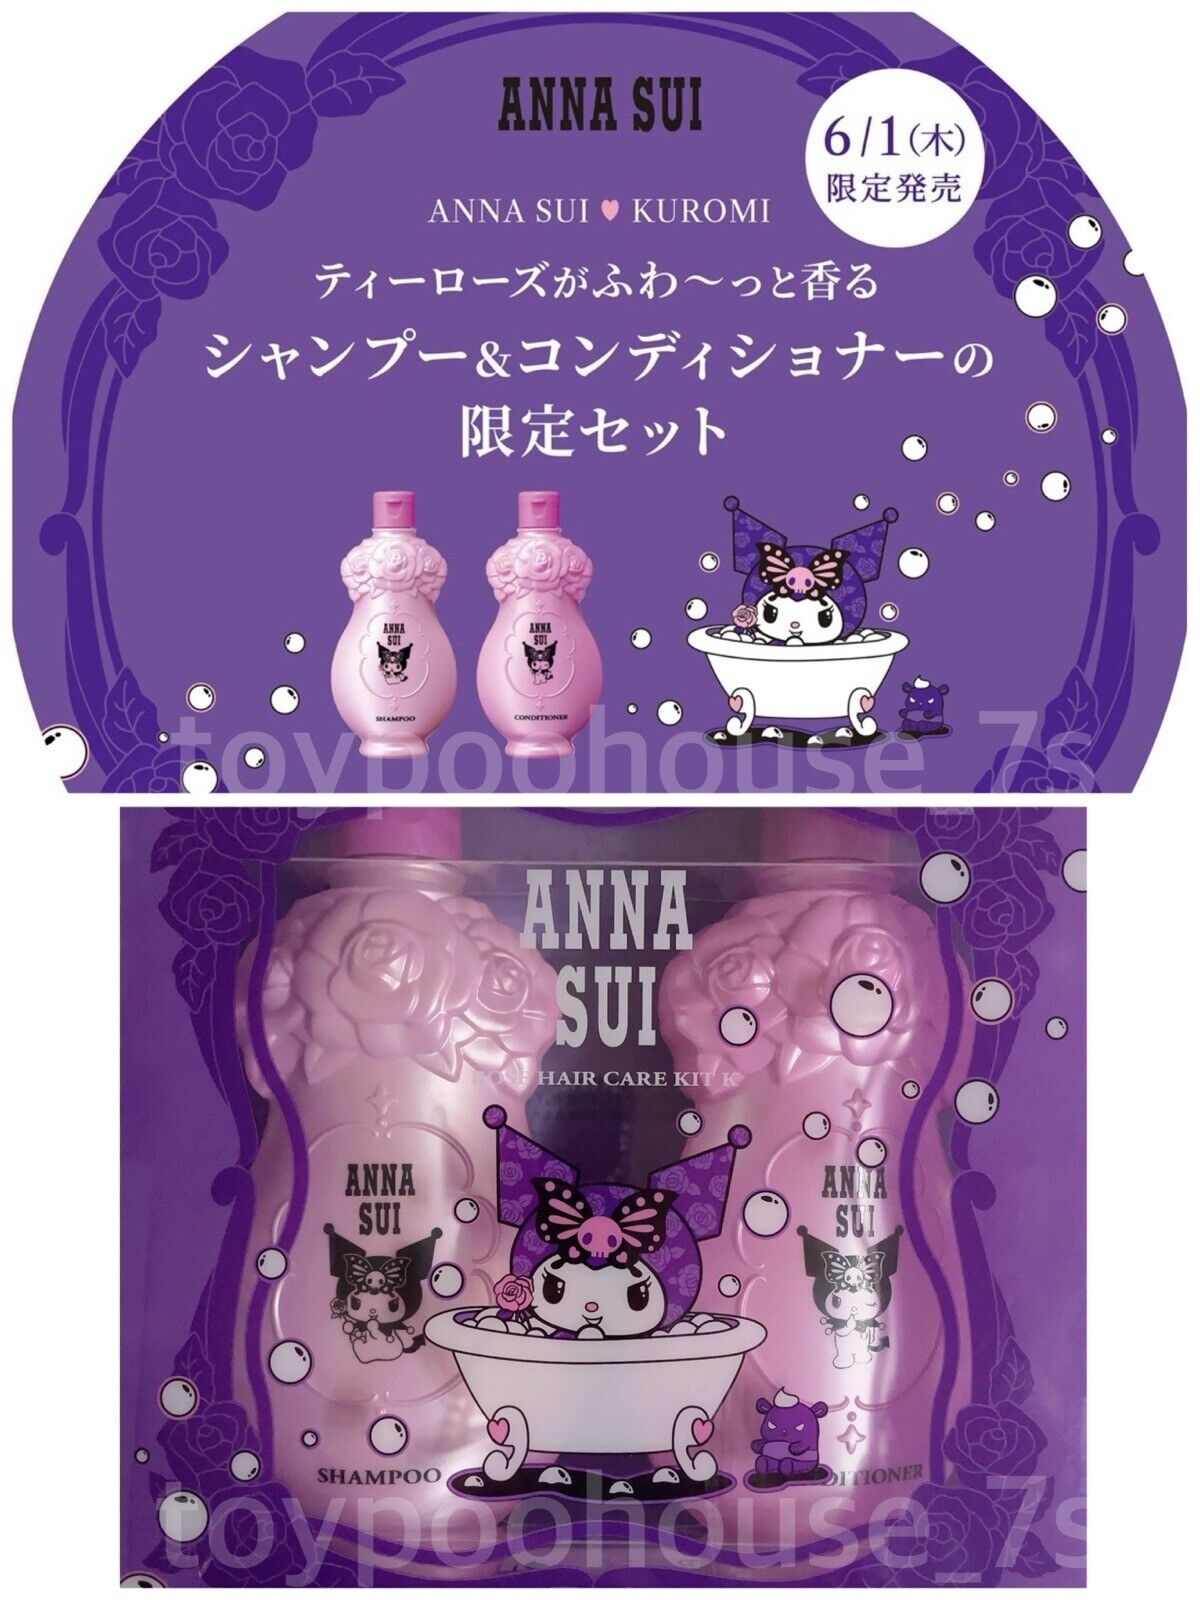 Sanrio × ANNA SUI Kuromi Hair Shampoo & Conditioner Japan Limited quantities New